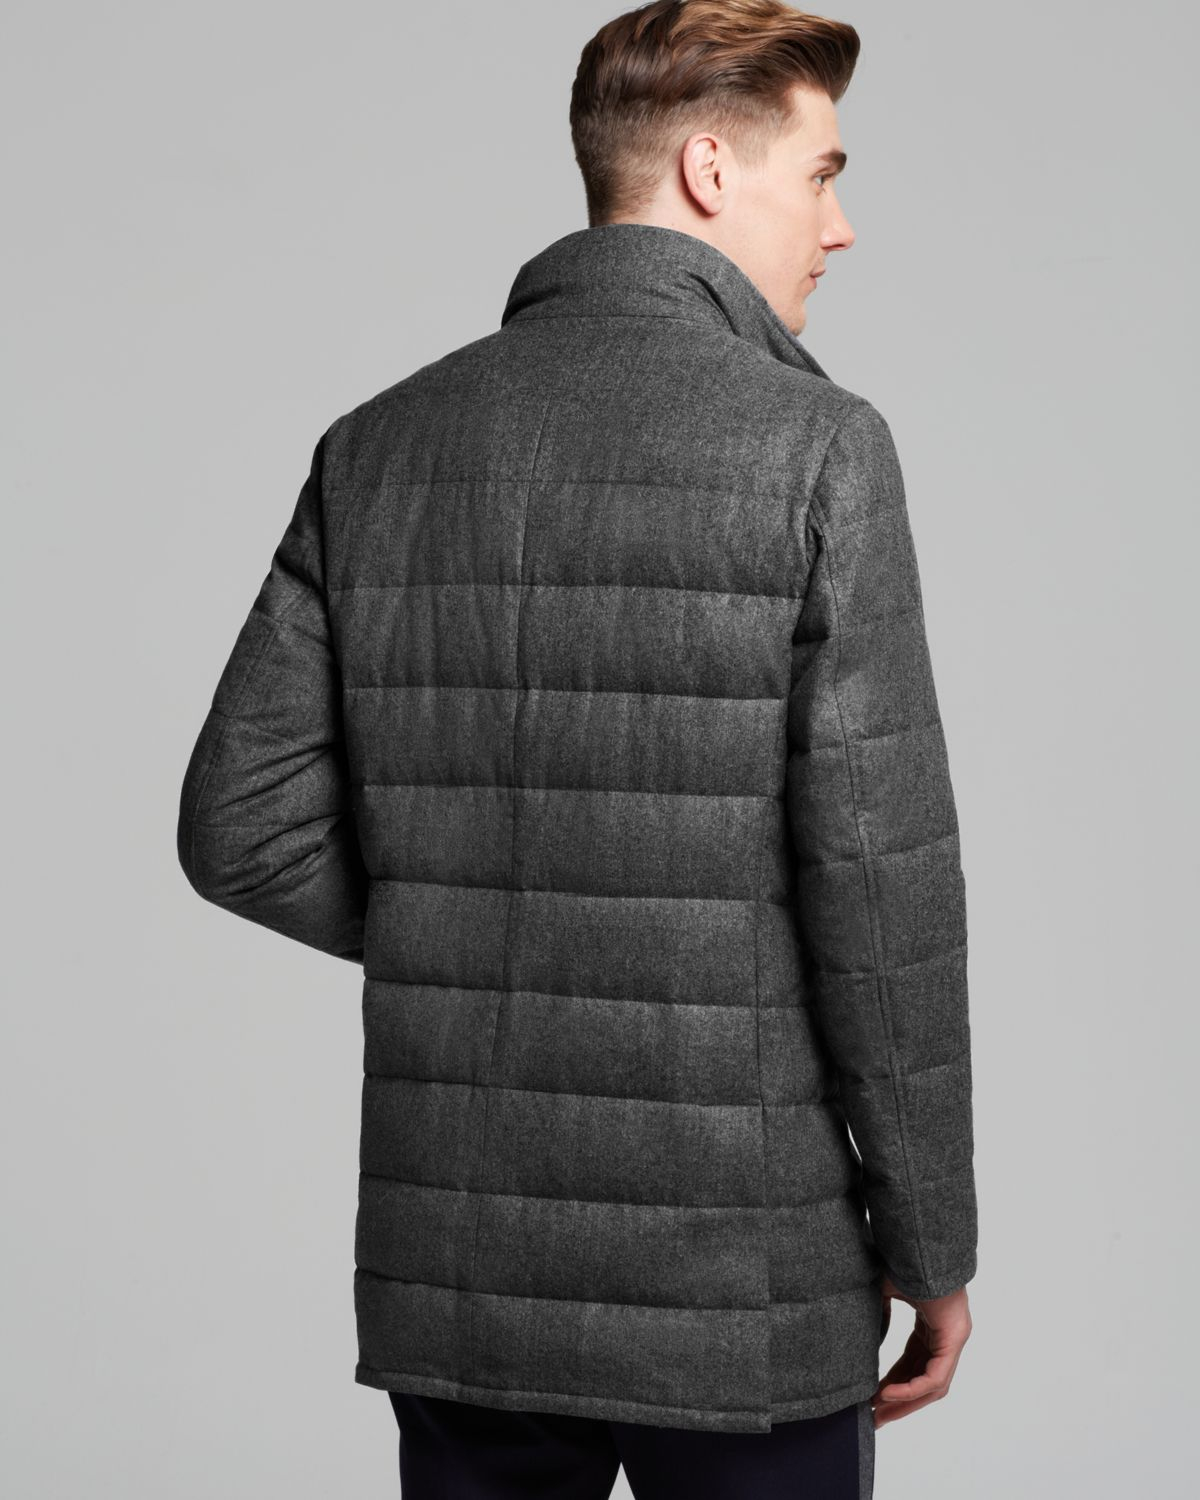 Moncler Vallier Coat in Charcoal (Gray) for Men - Lyst